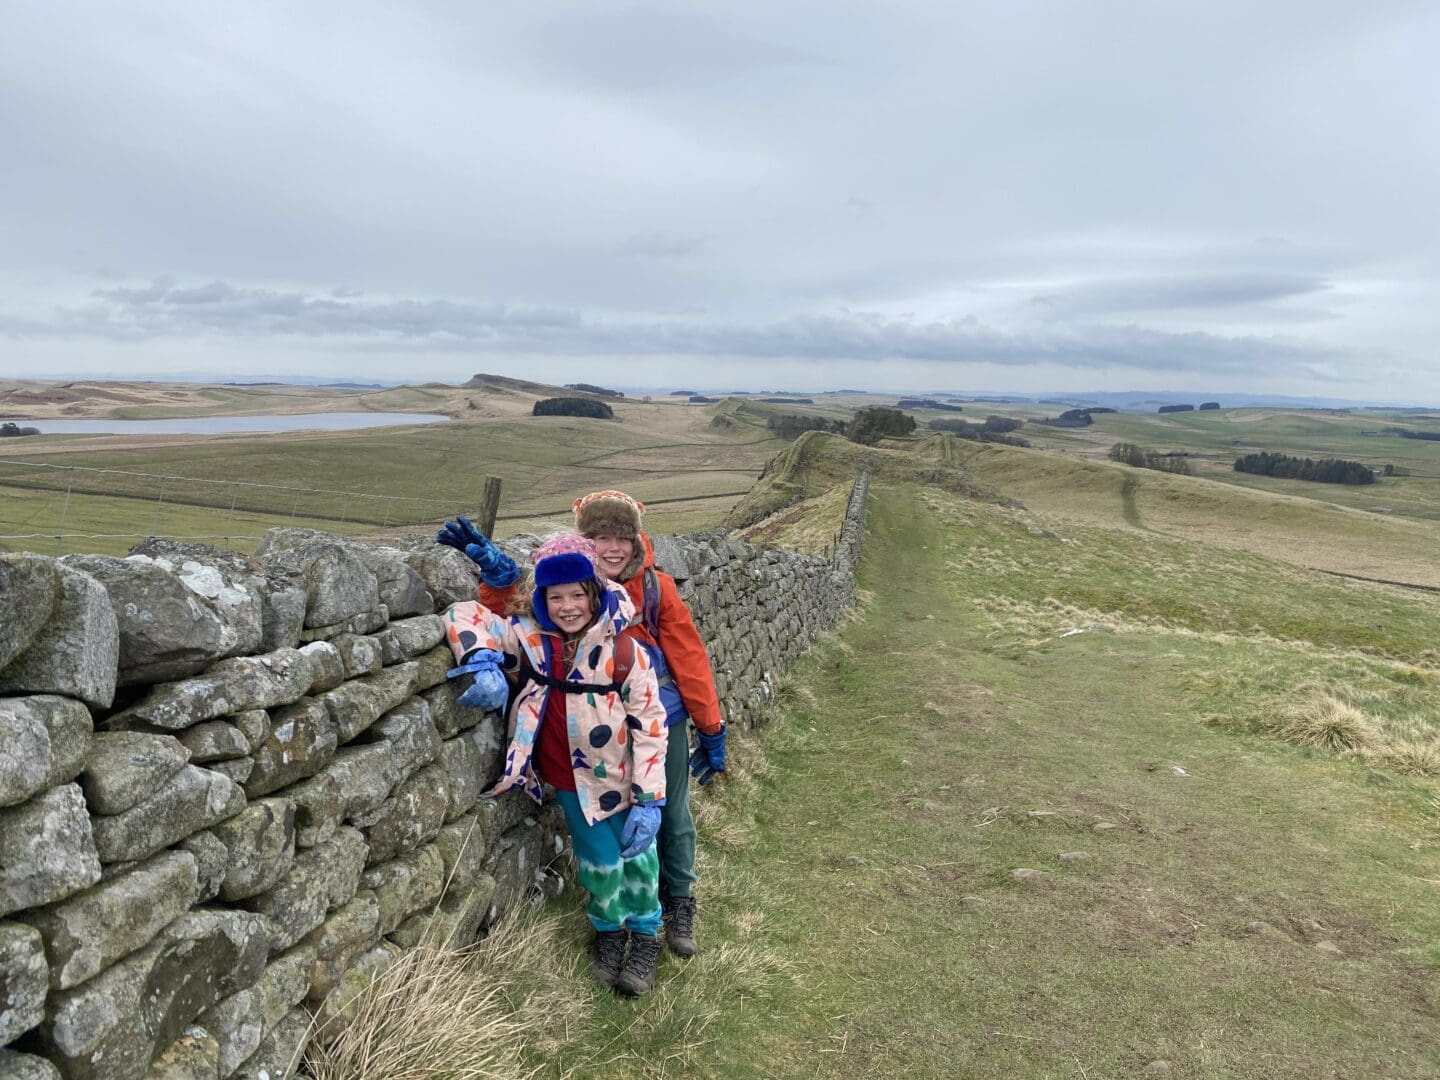 Children at Hadrian’s wall